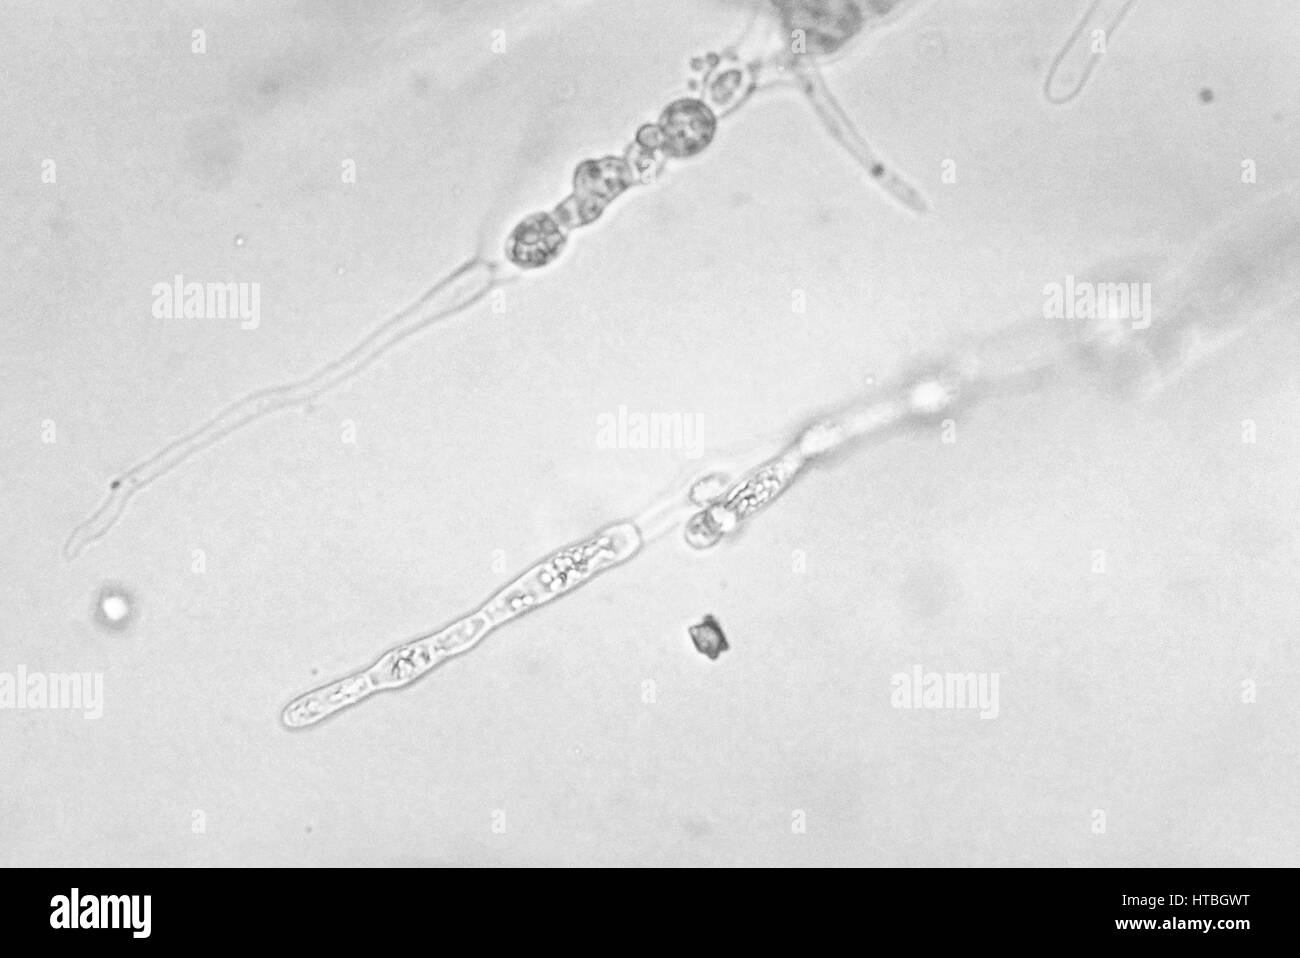 Algae Prototheca filamenta, which resembles a fungal organism due to its mycelia-like filaments, 1973. Image courtesy CDC/Dr. Libero Ajello. Stock Photo